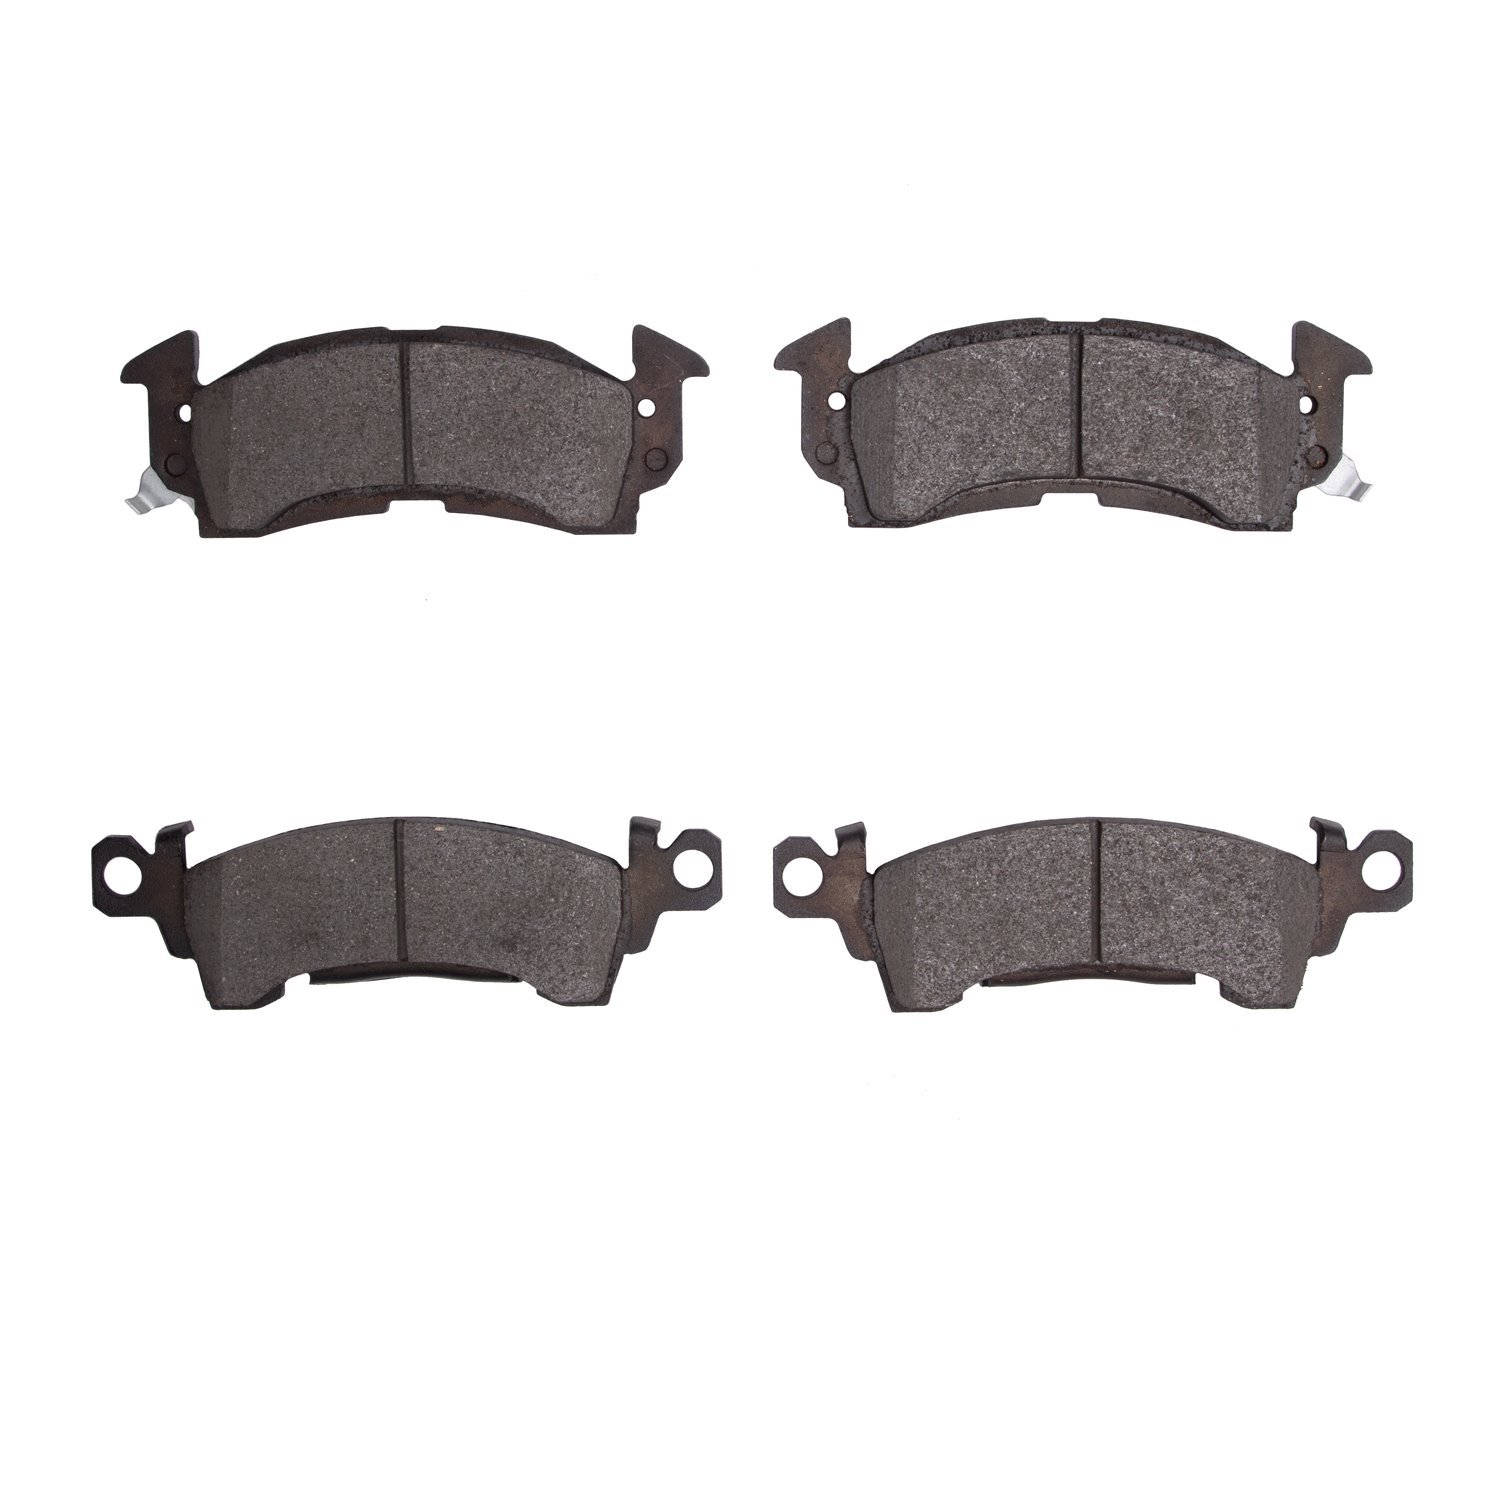 Semi-Metallic Brake Pads, 1967-2002 Fits Multiple Makes/Models, Position: Front